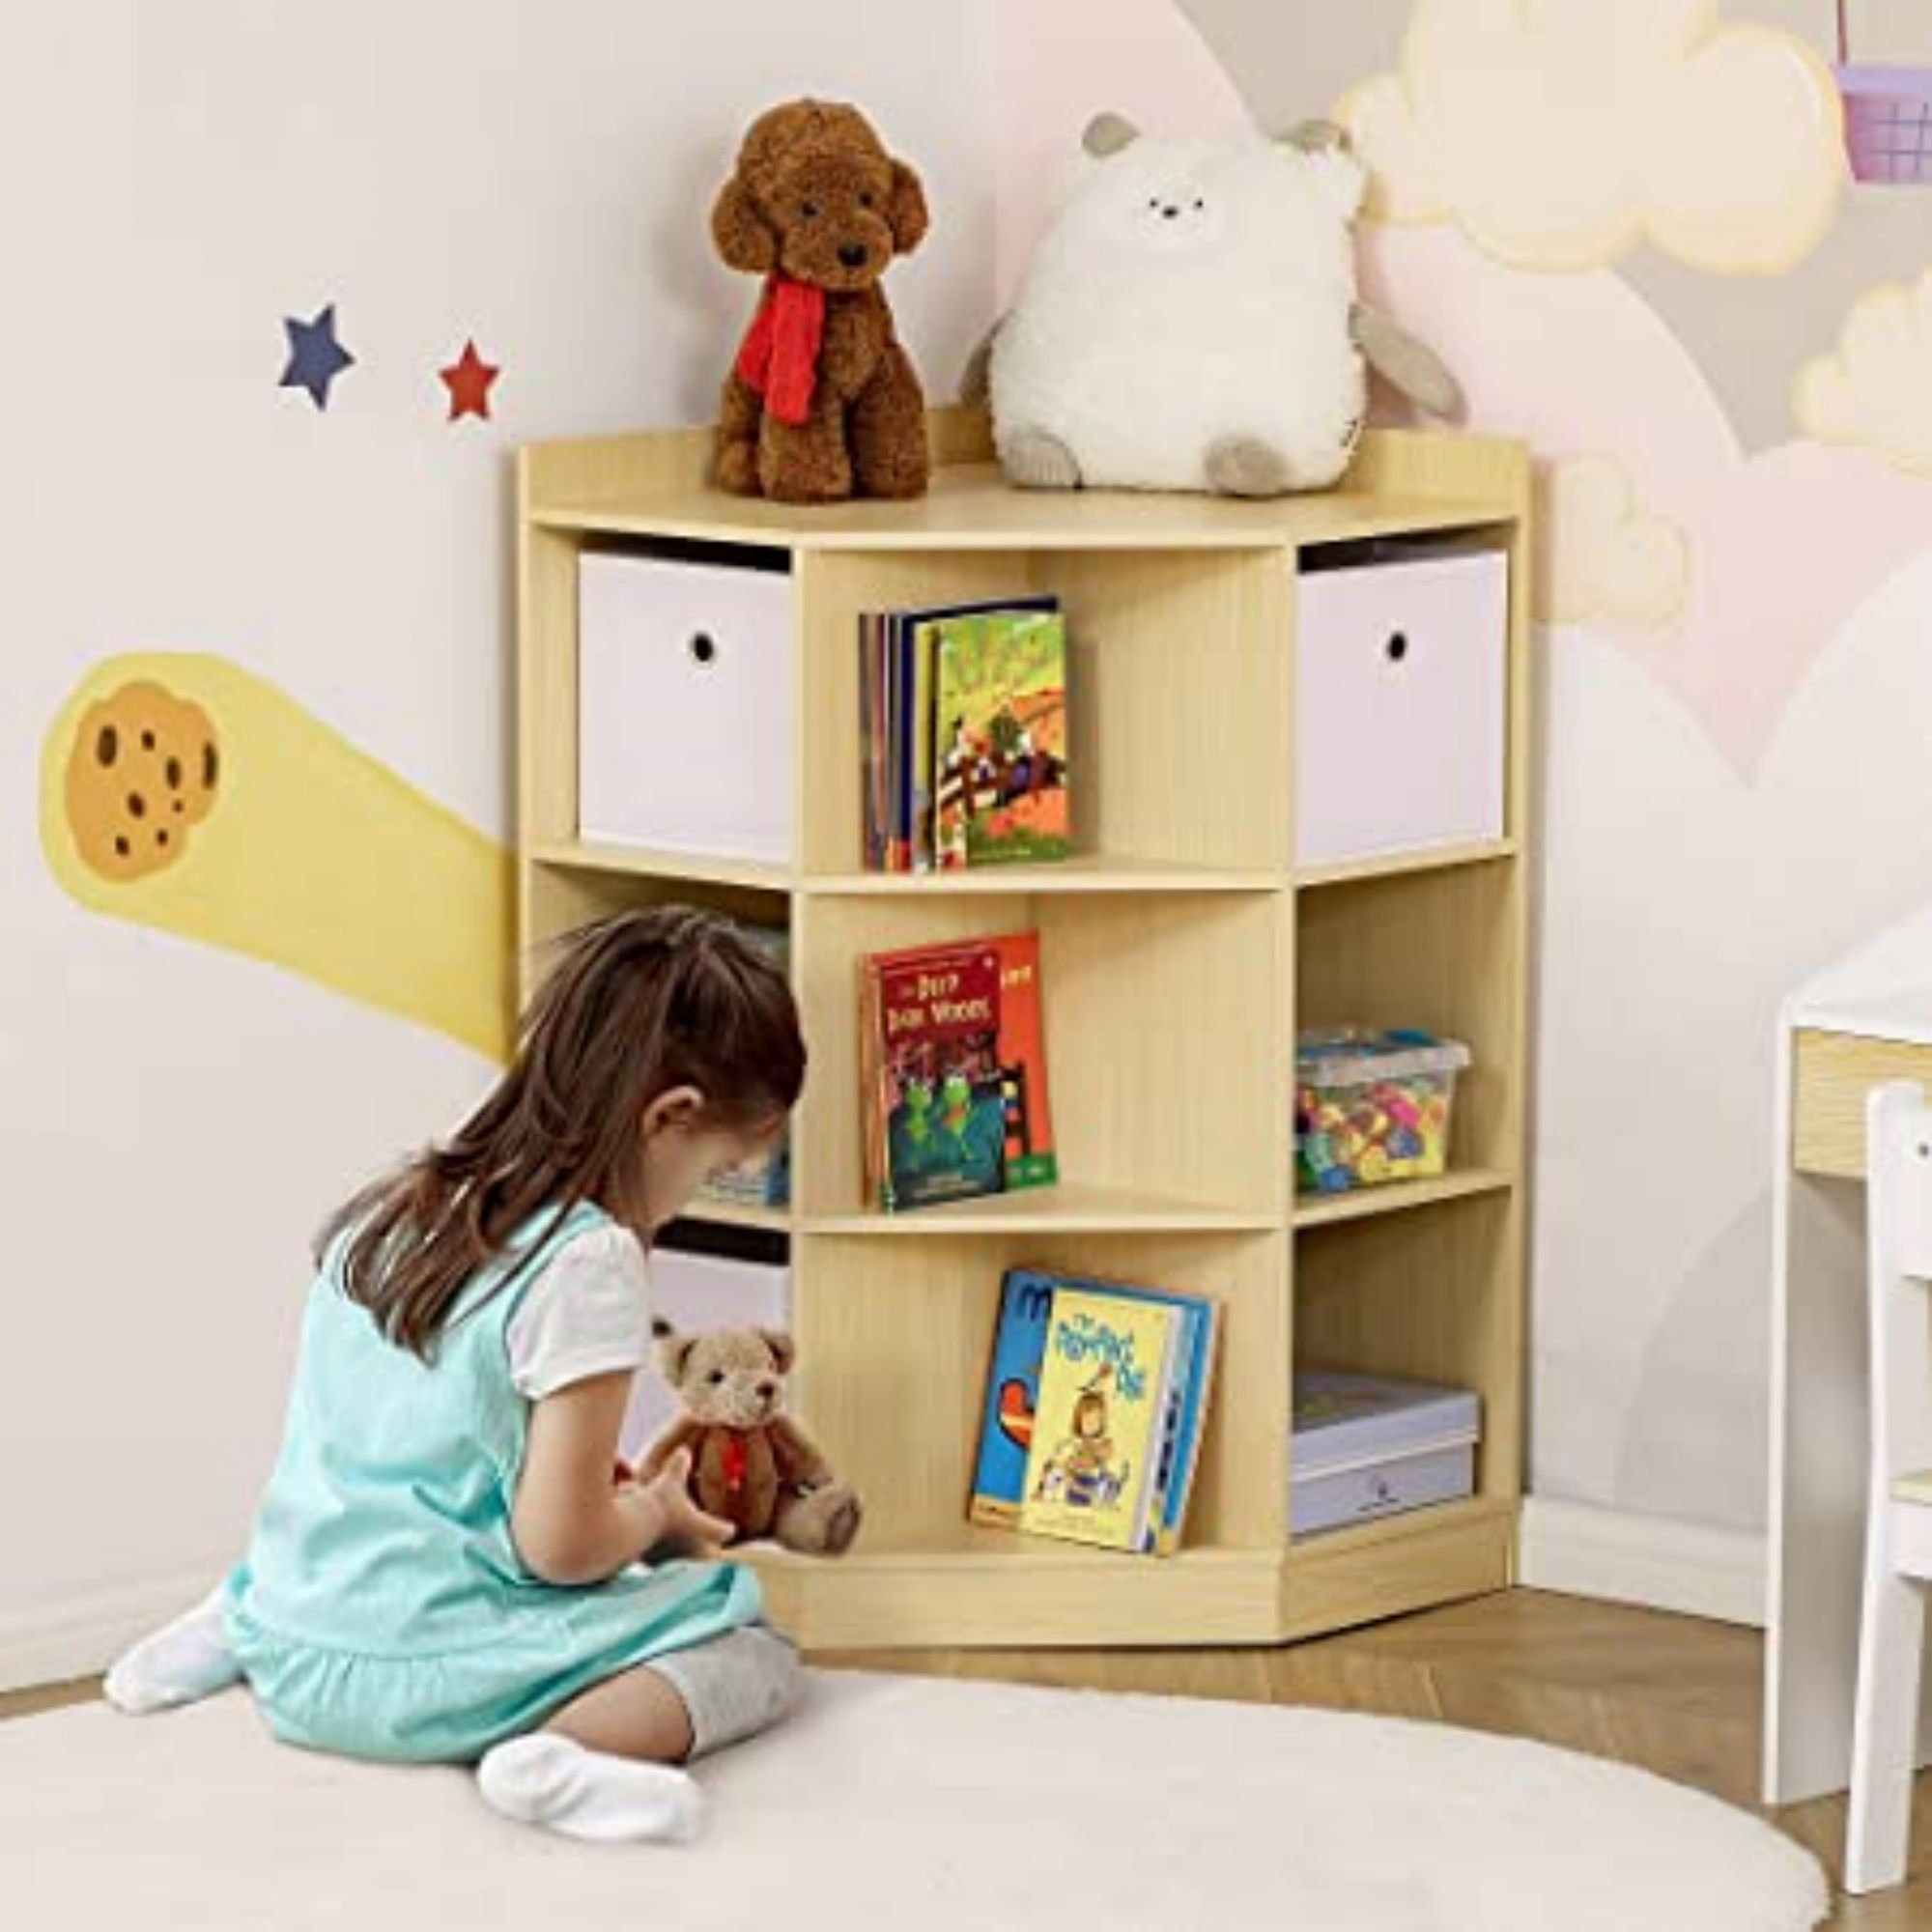 HOMCOM Toy Chest Kids Cabinet Storage Organizer for Toys Clothes Books, White